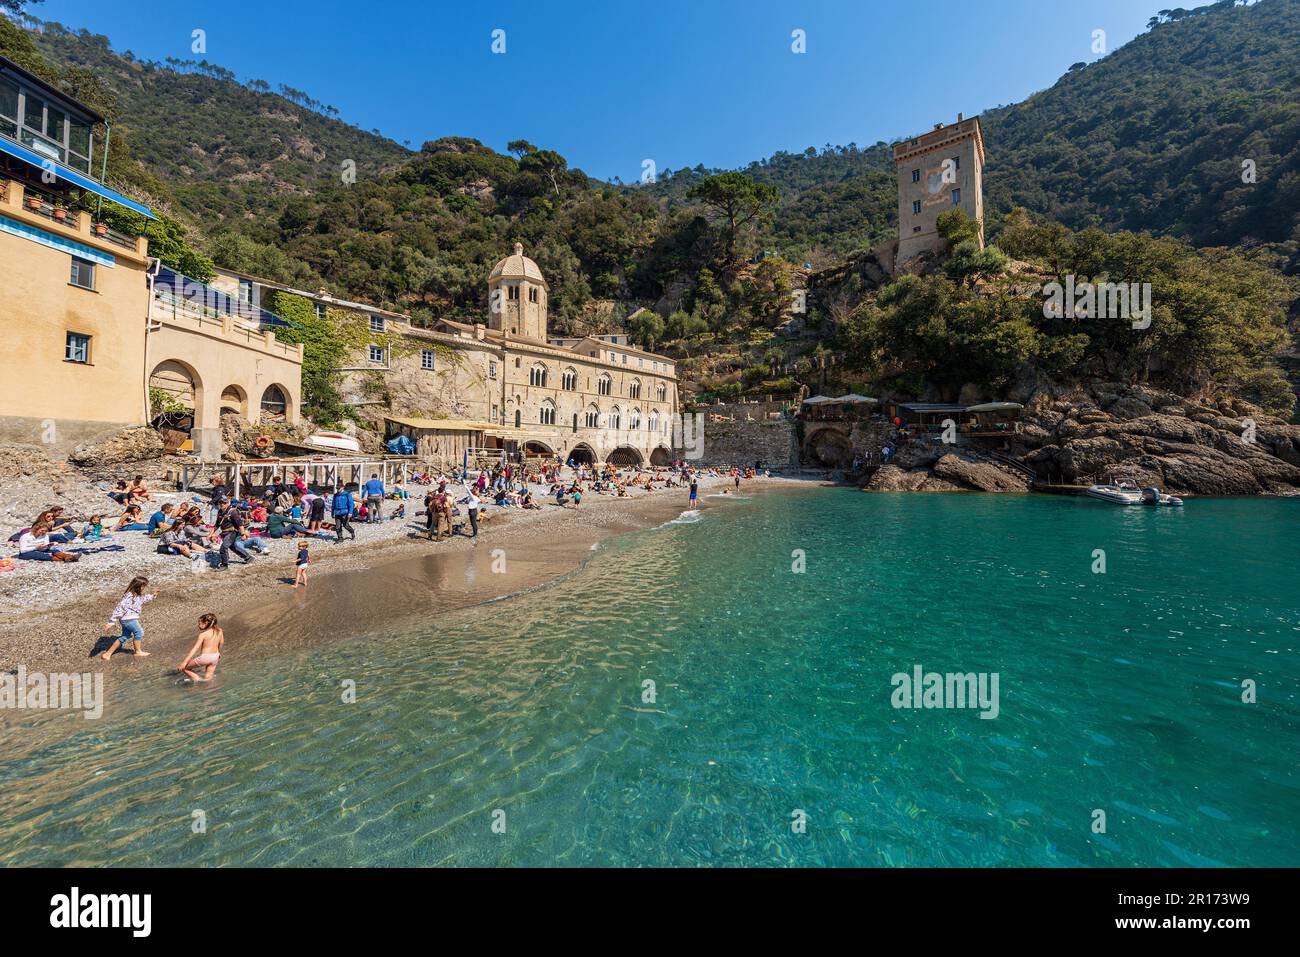 Ancient San Fruttuoso Abbey, X-XI century. Beach crowded with tourists near Portofino and Camogli, Genoa province (Genova), Liguria, Italy, Europe. Stock Photo